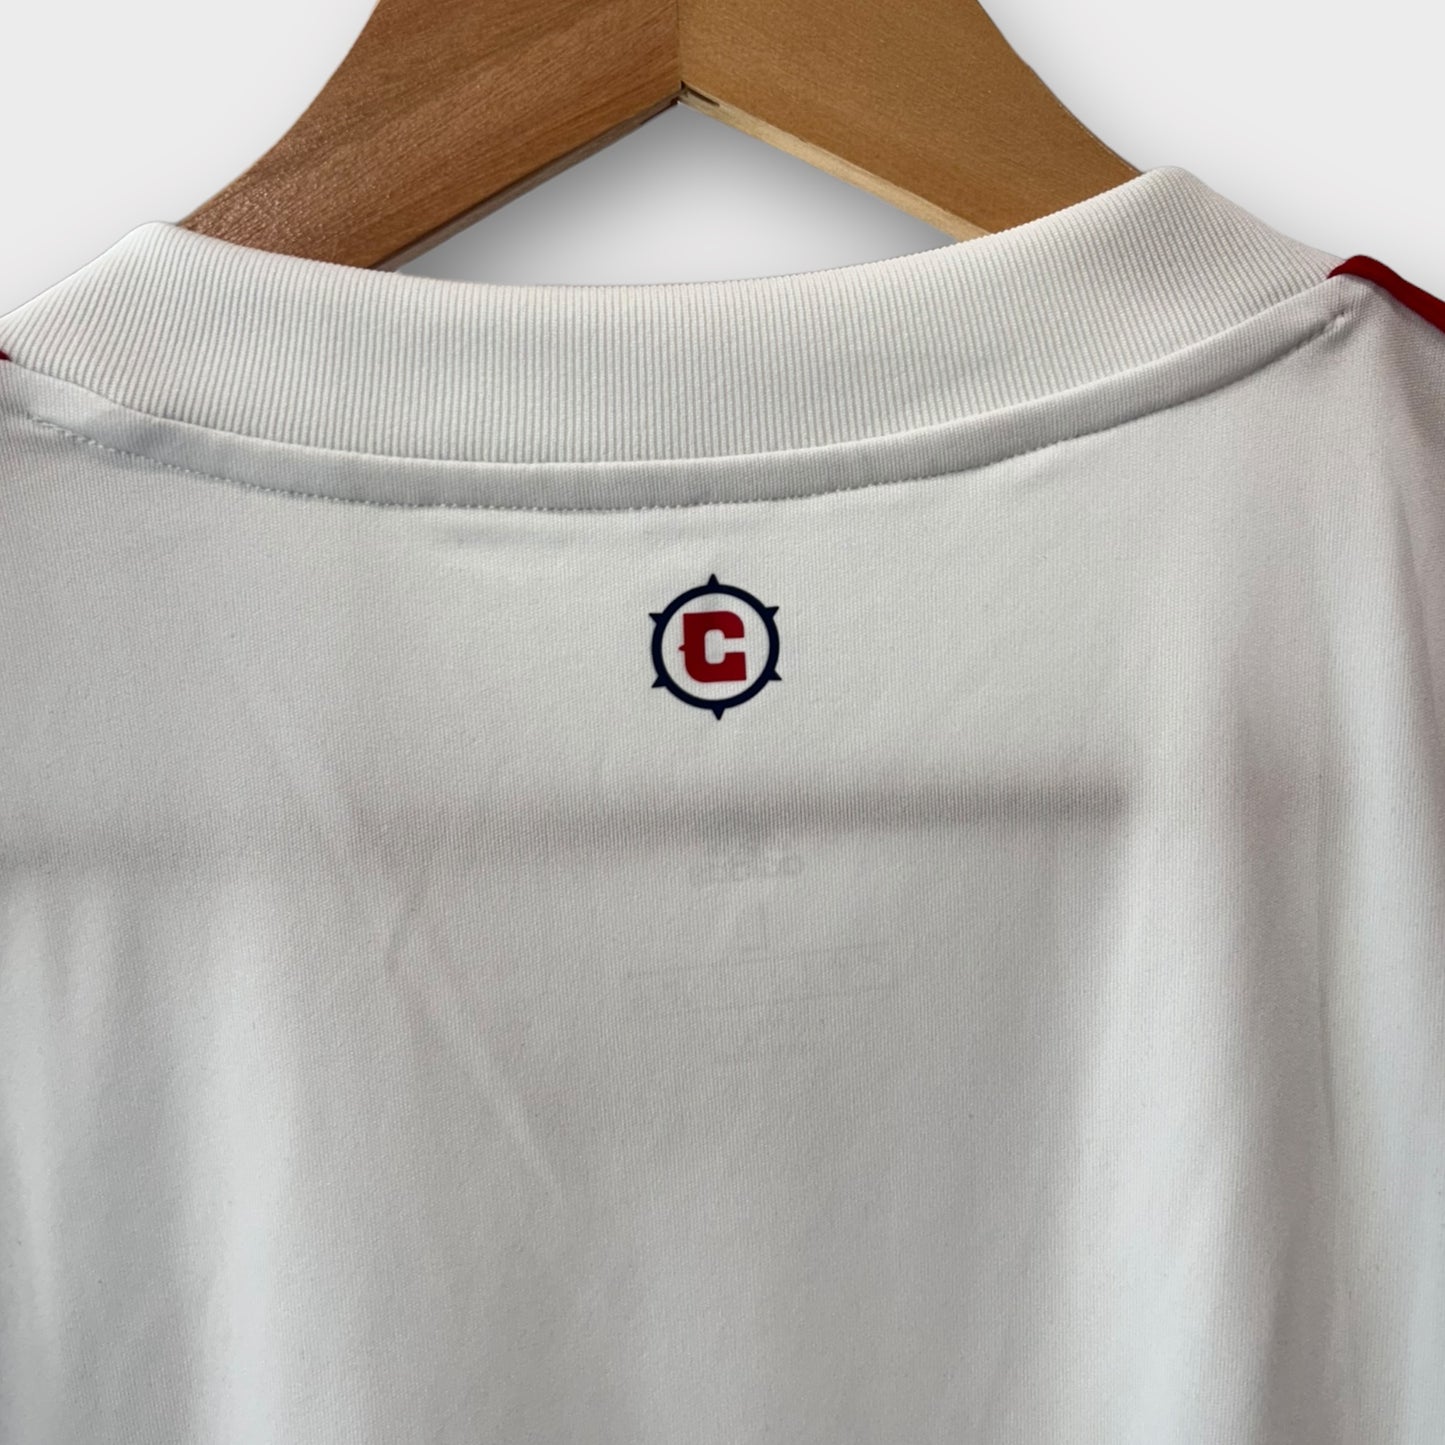 Chicago Fire 2019 Away Shirt (Large)